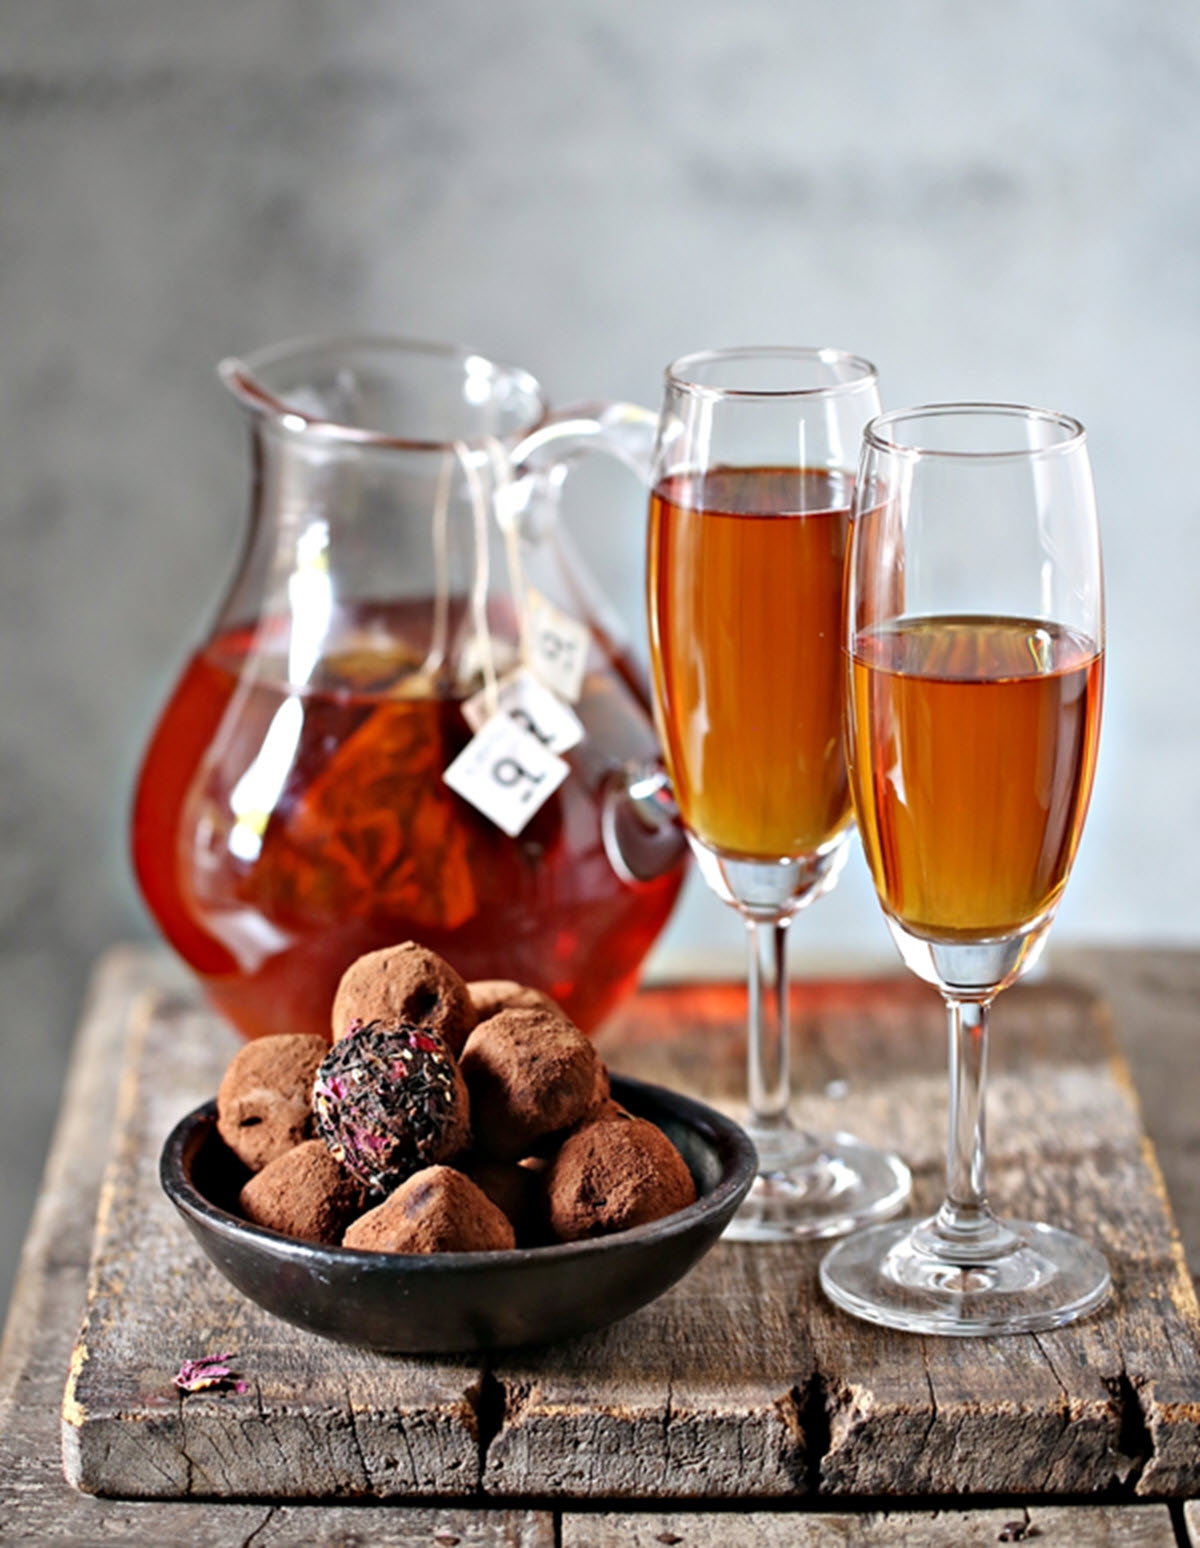 Homemade Rose tea chocolate truffles make the best holiday gifts. Photo by Deeba Rajpal.